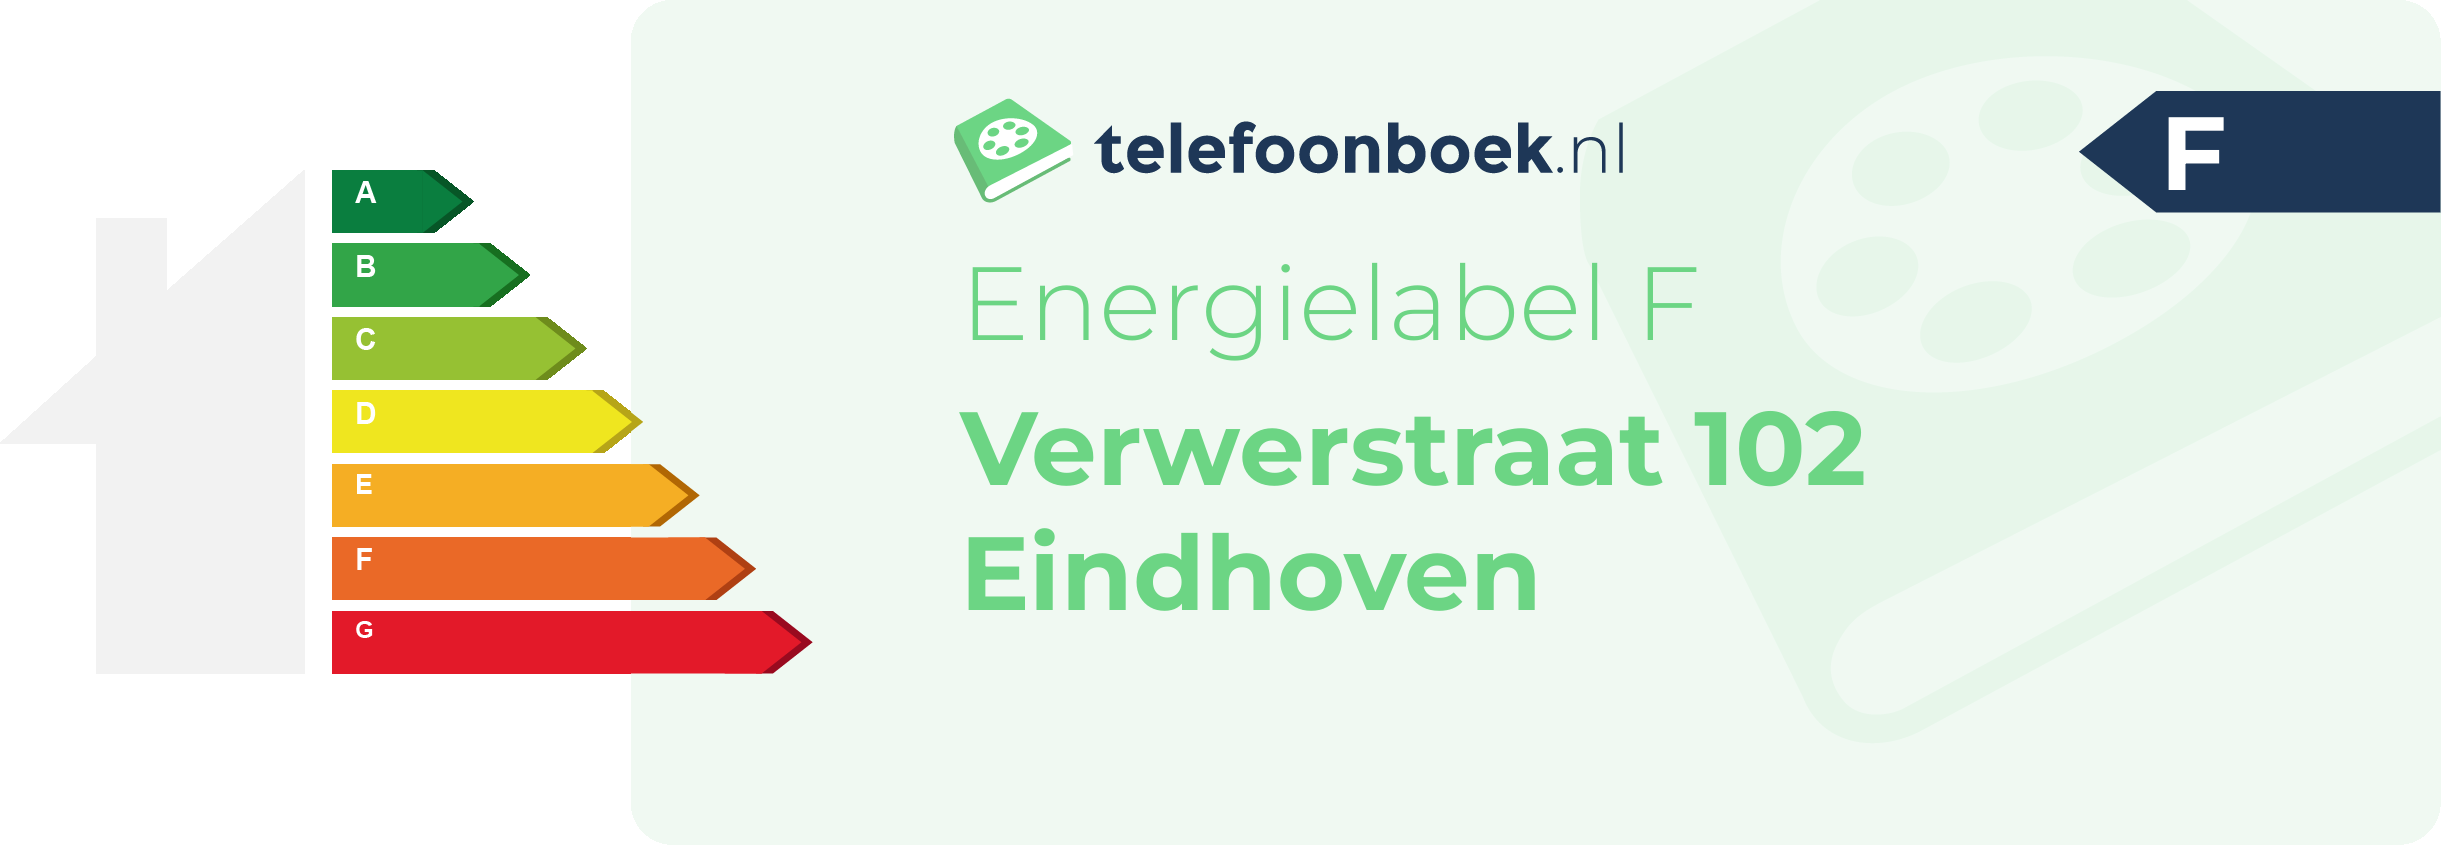 Energielabel Verwerstraat 102 Eindhoven